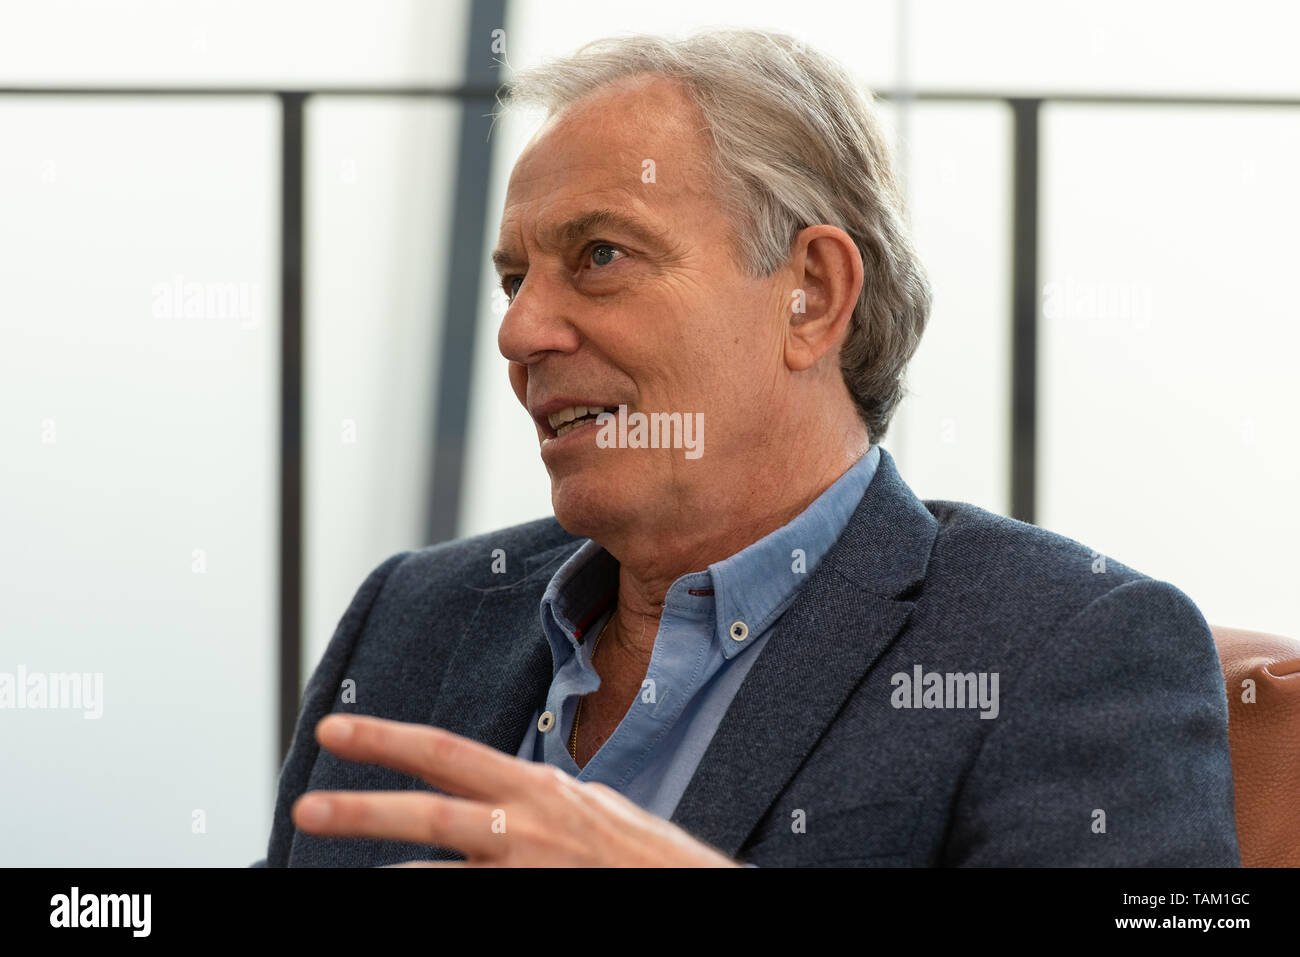 Tony Blair, fotografiert in seinem Londoner Büro / Tony Blair, photographié dans son bureau. / Tony Blair, photographed in his London office. Stock Photo